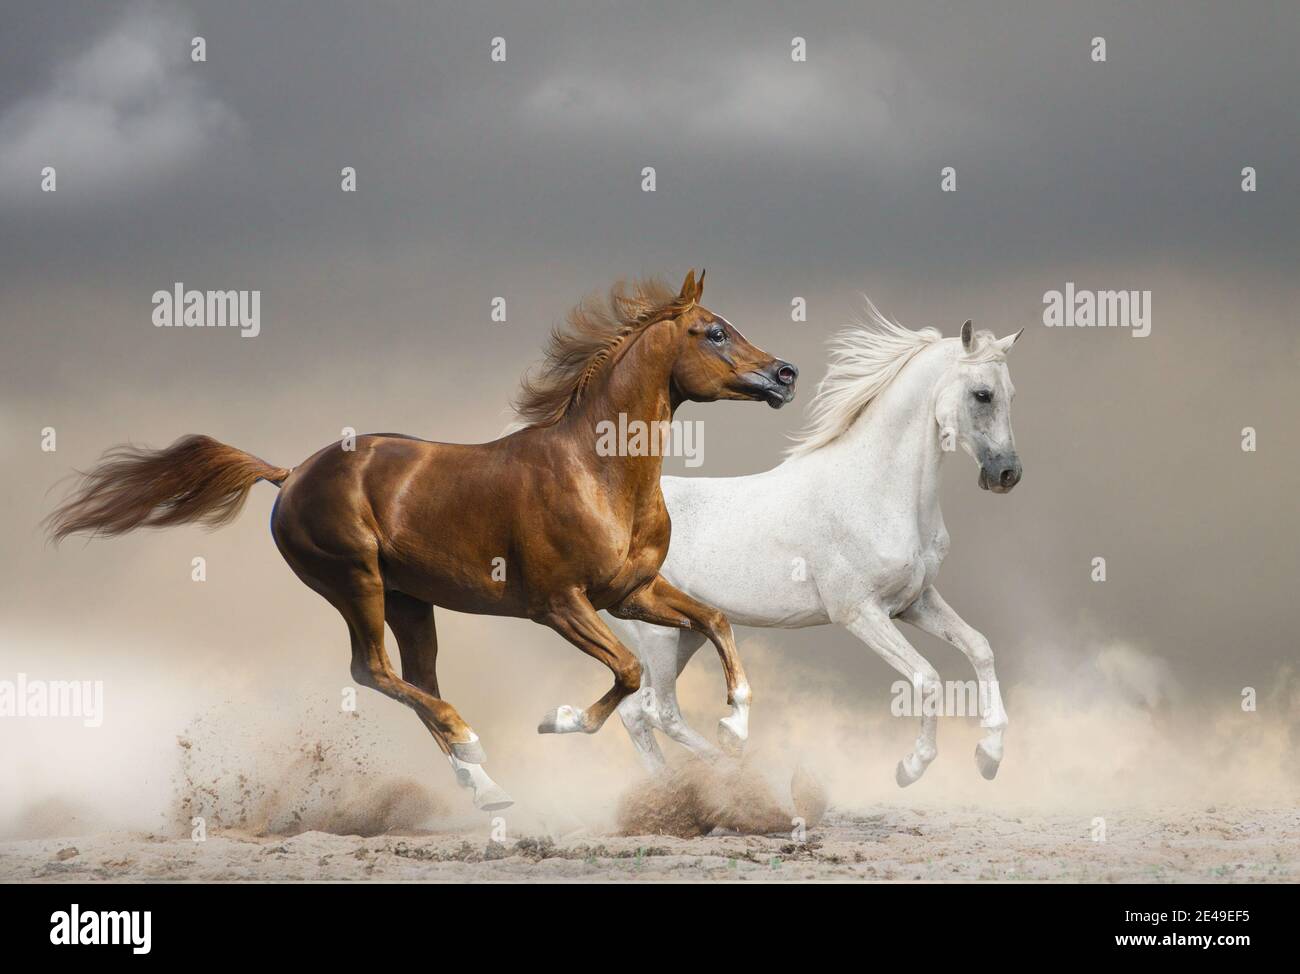 Arabian horses running wild against the stormy skies in desert Stock Photo